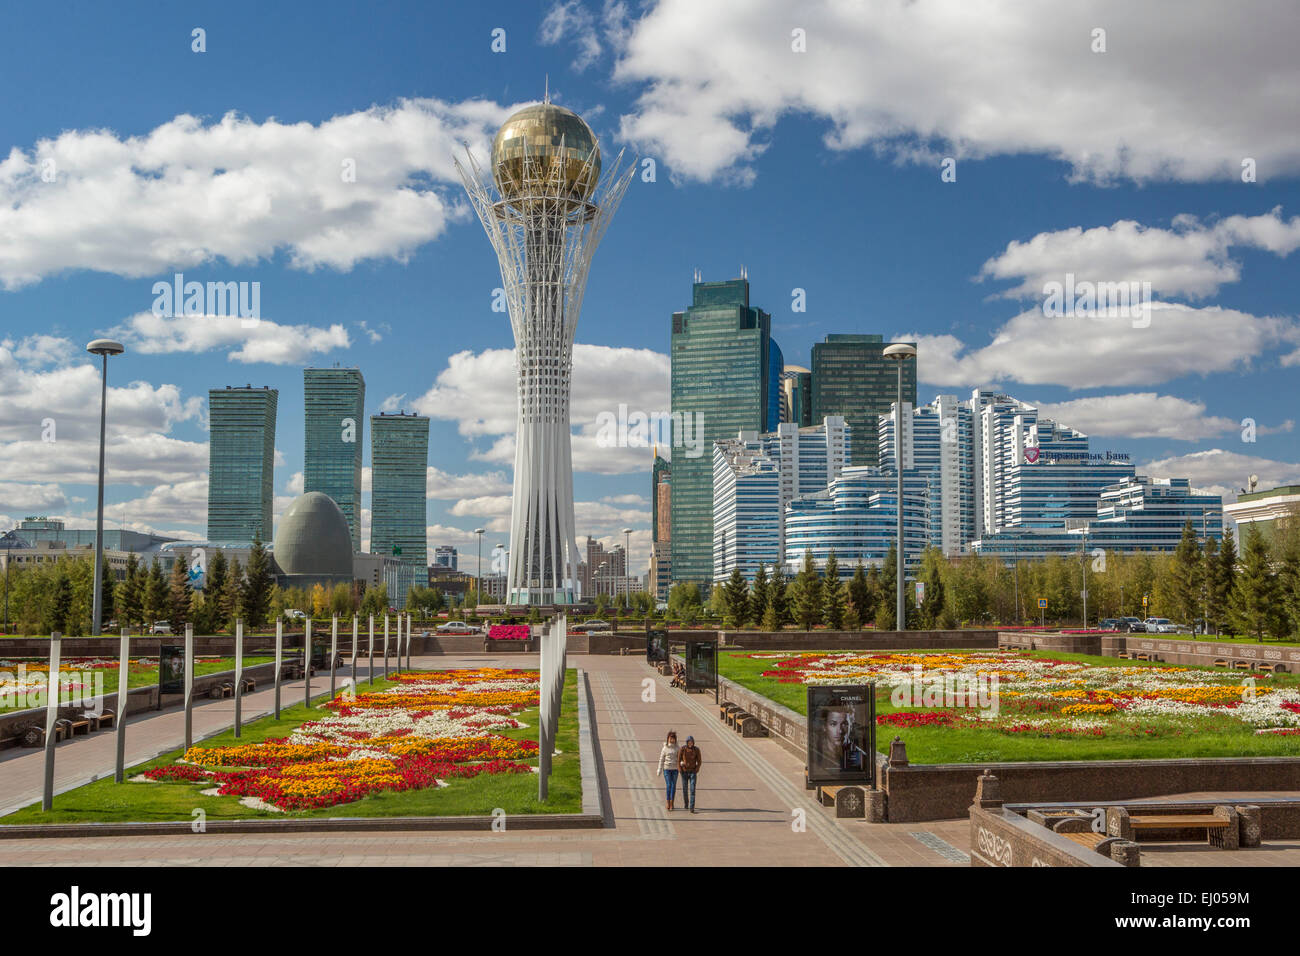 Astana, Avenue, Bayterek, Boulevard, City, Flowers, Plants, Kazakhstan, Central Asia, Monument, New City, Nurzhol, architecture, Stock Photo